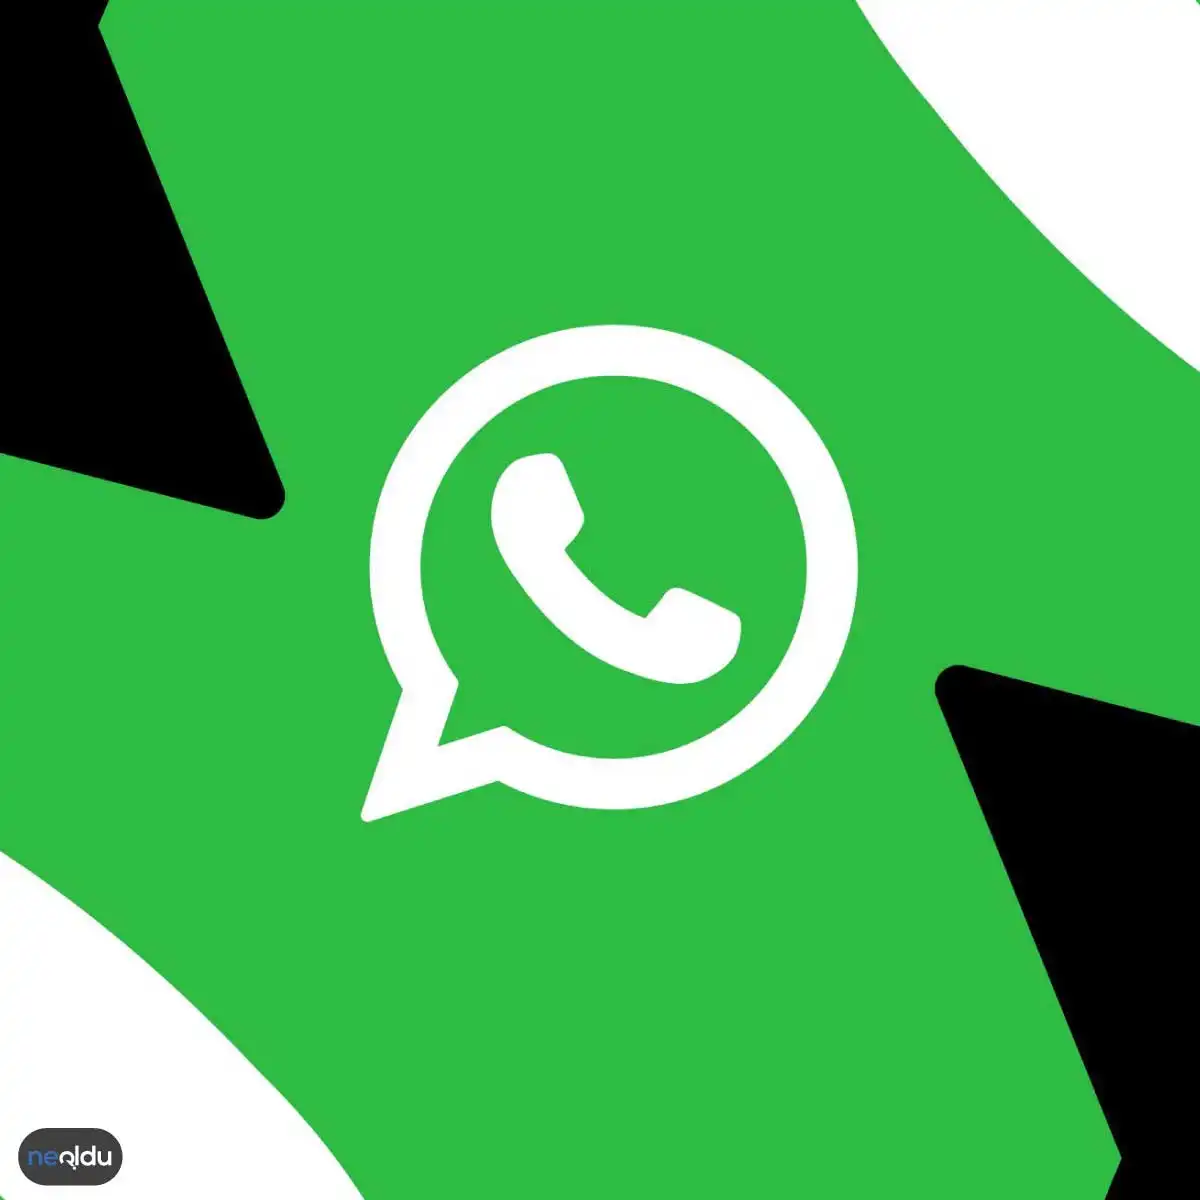 WhatsApp Web İnternetsiz Kullanılabilir mi?